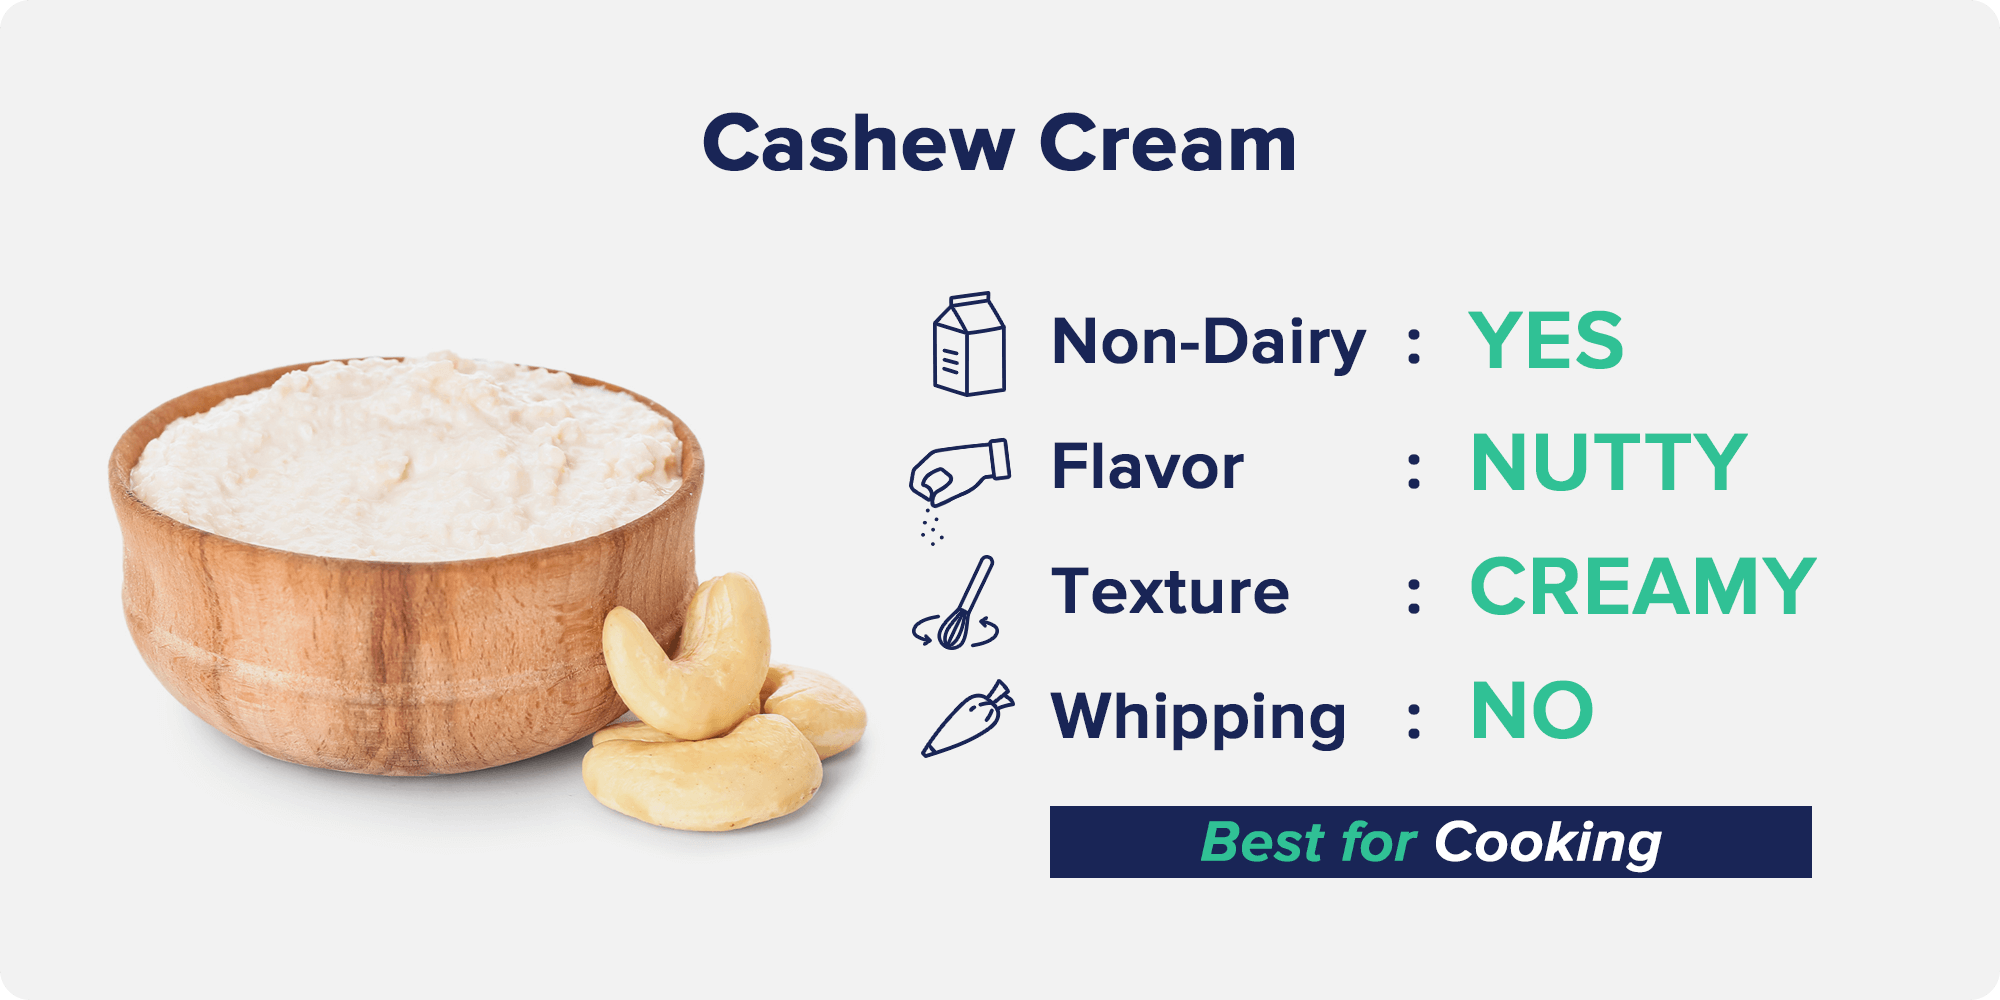 cashew cream